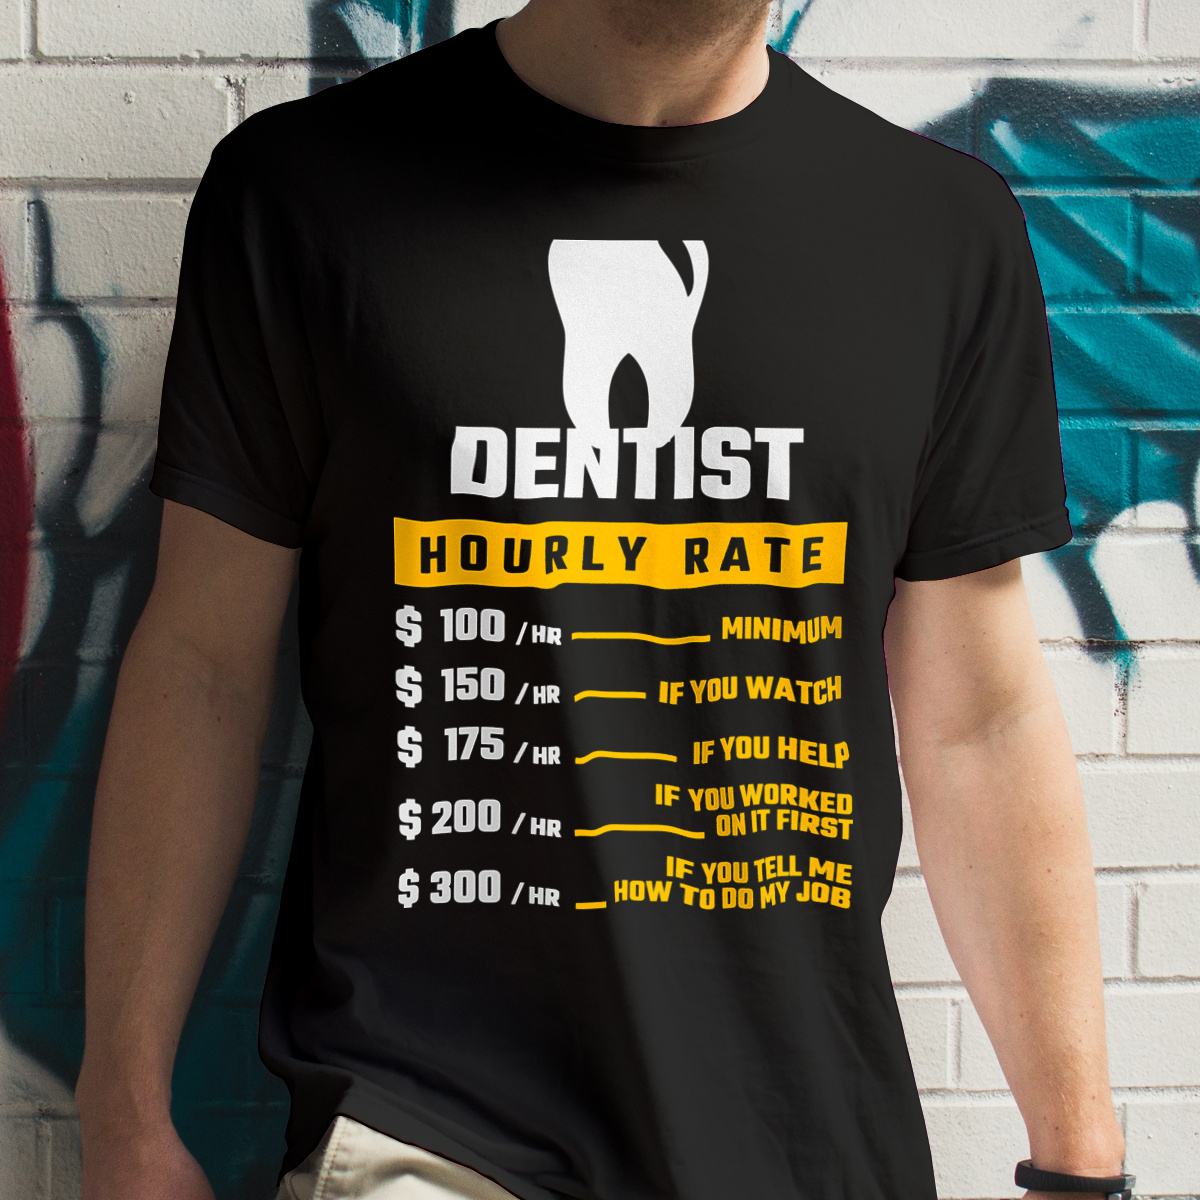 Hourly Rate Dentist - Męska Koszulka Czarna